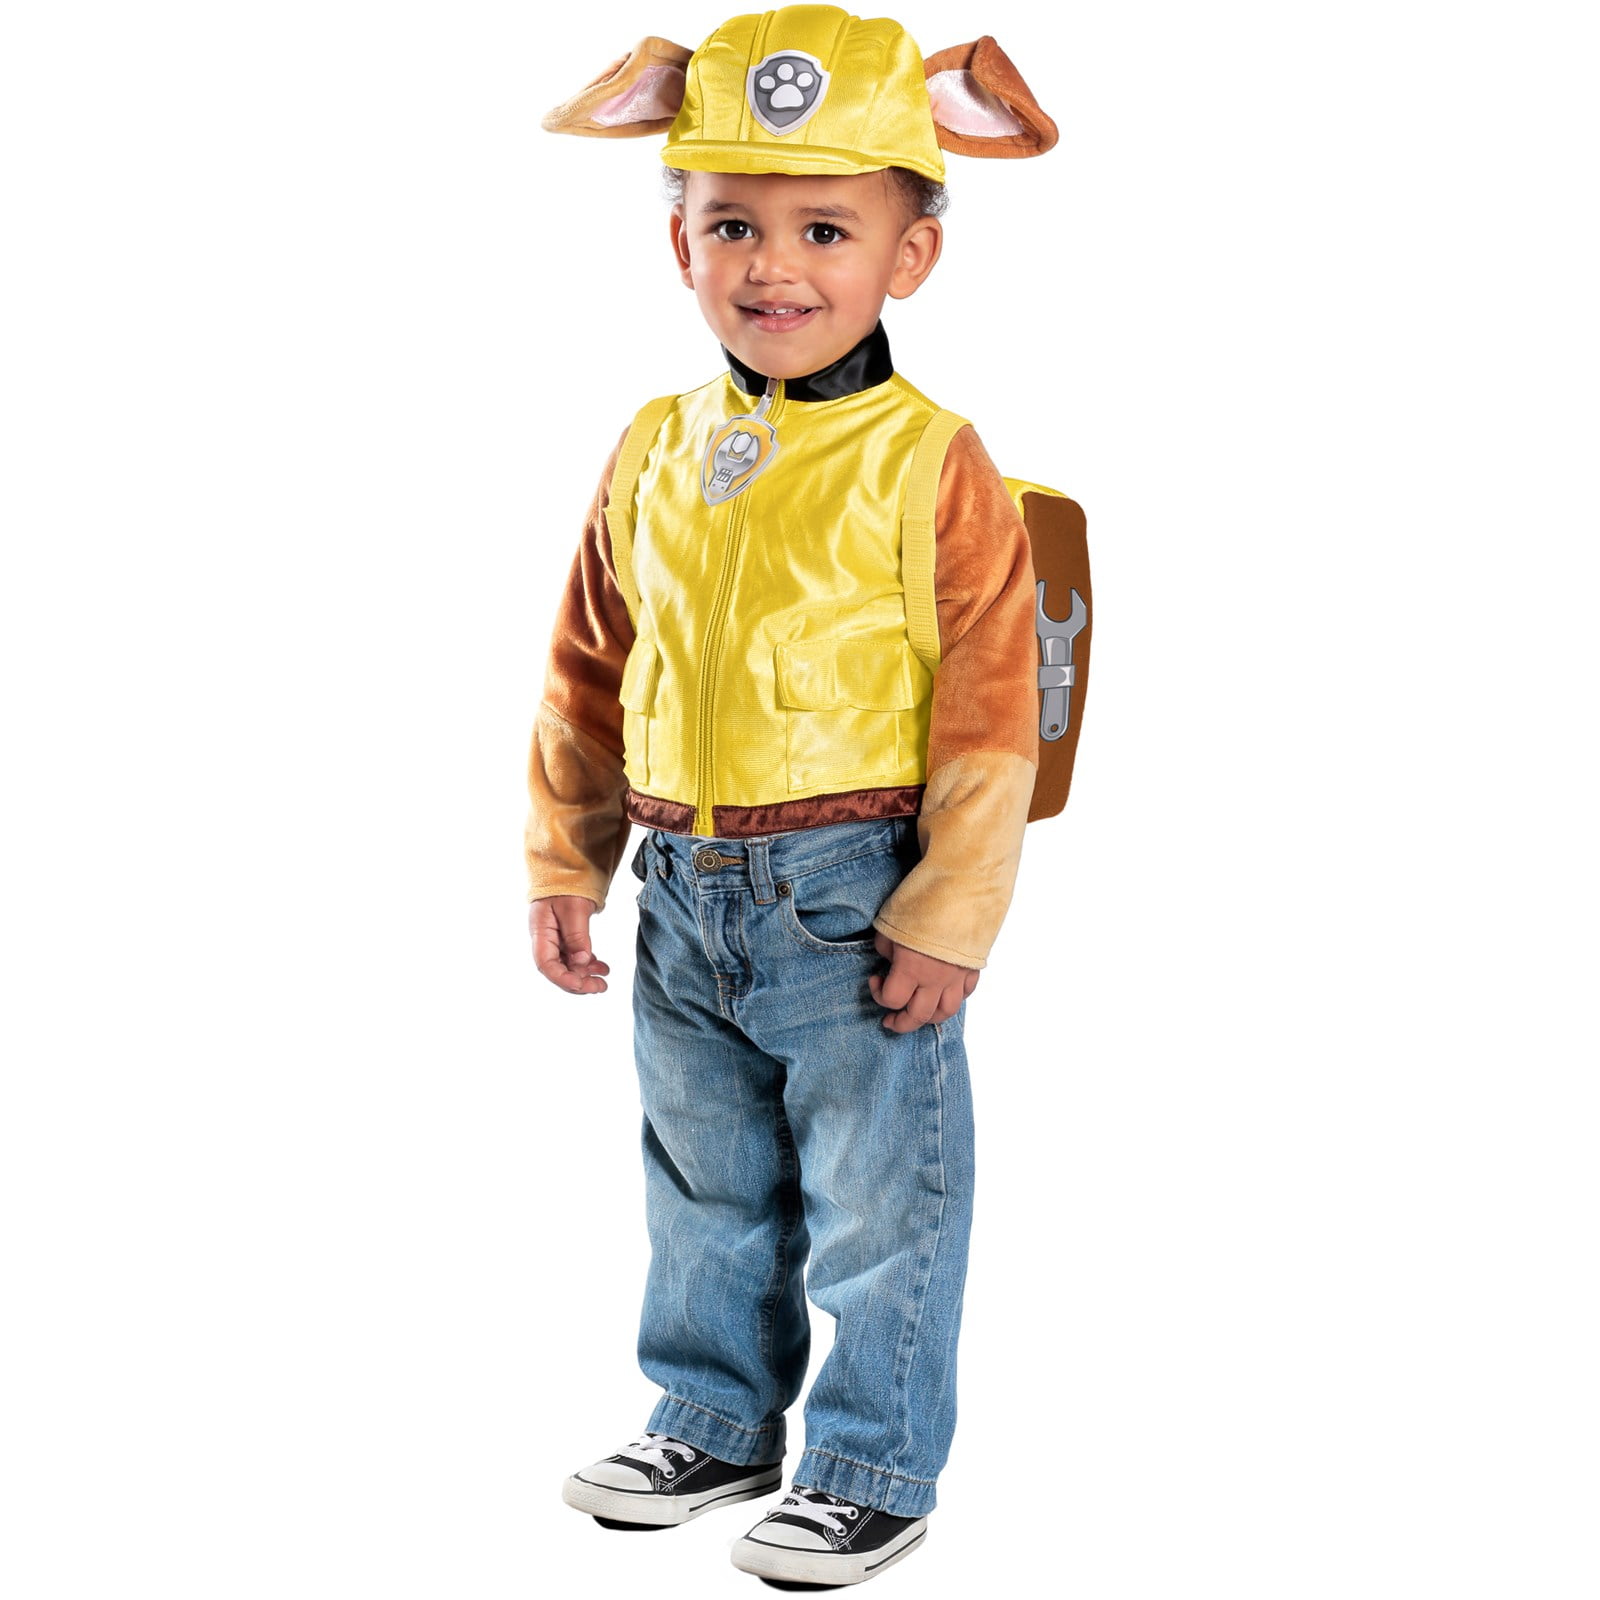 Rubble Deluxe Costume Toddler - Walmart.com